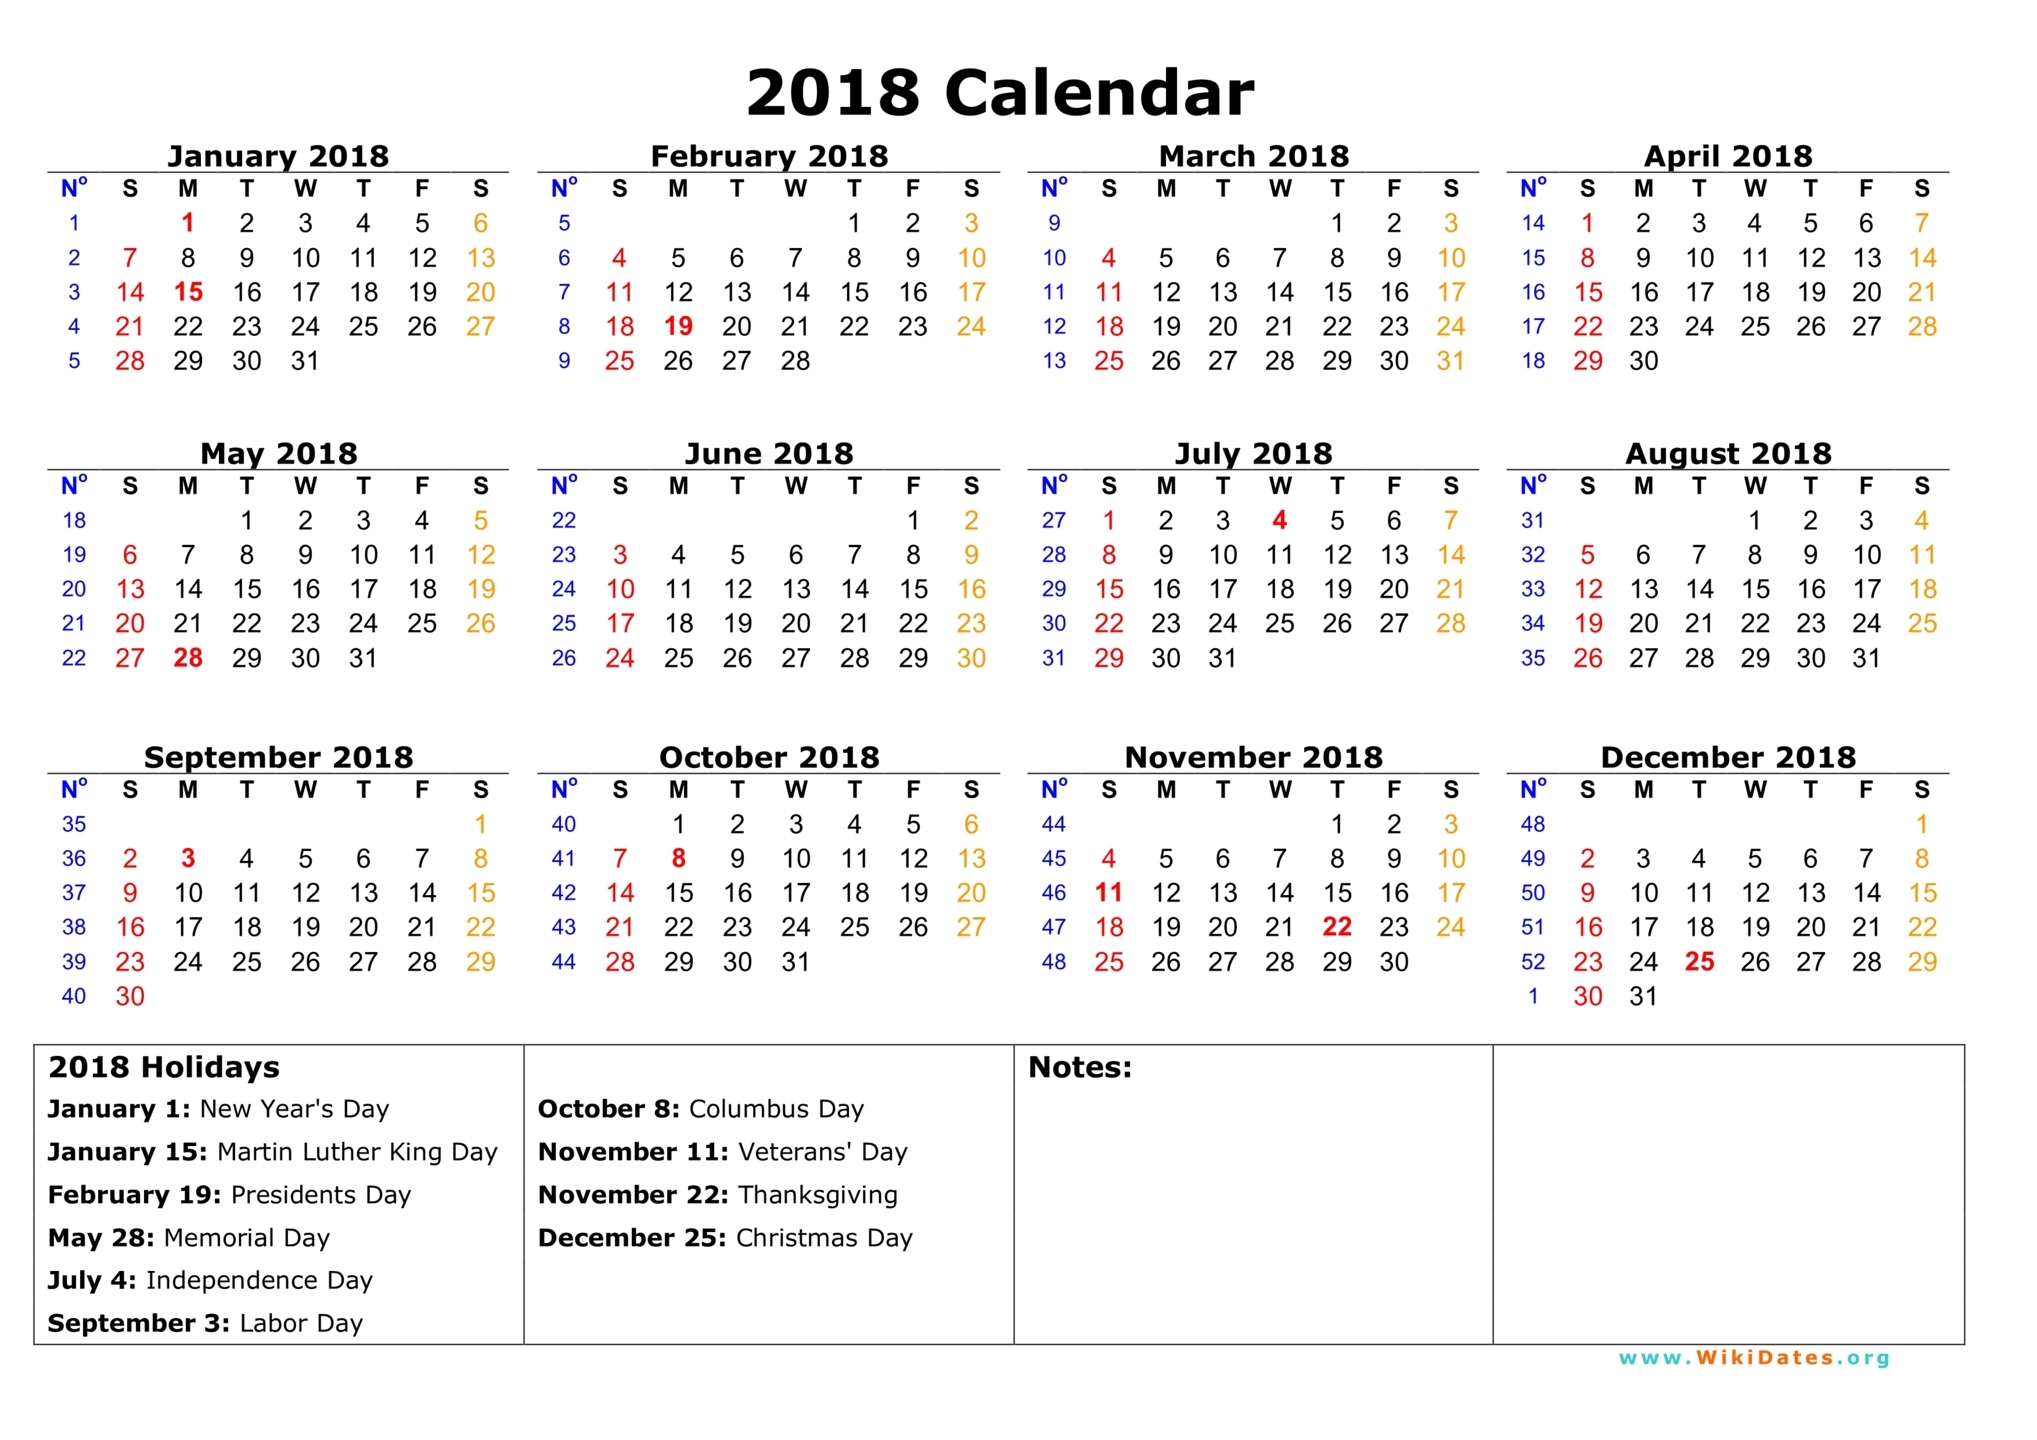 2018-calendar-wikidates